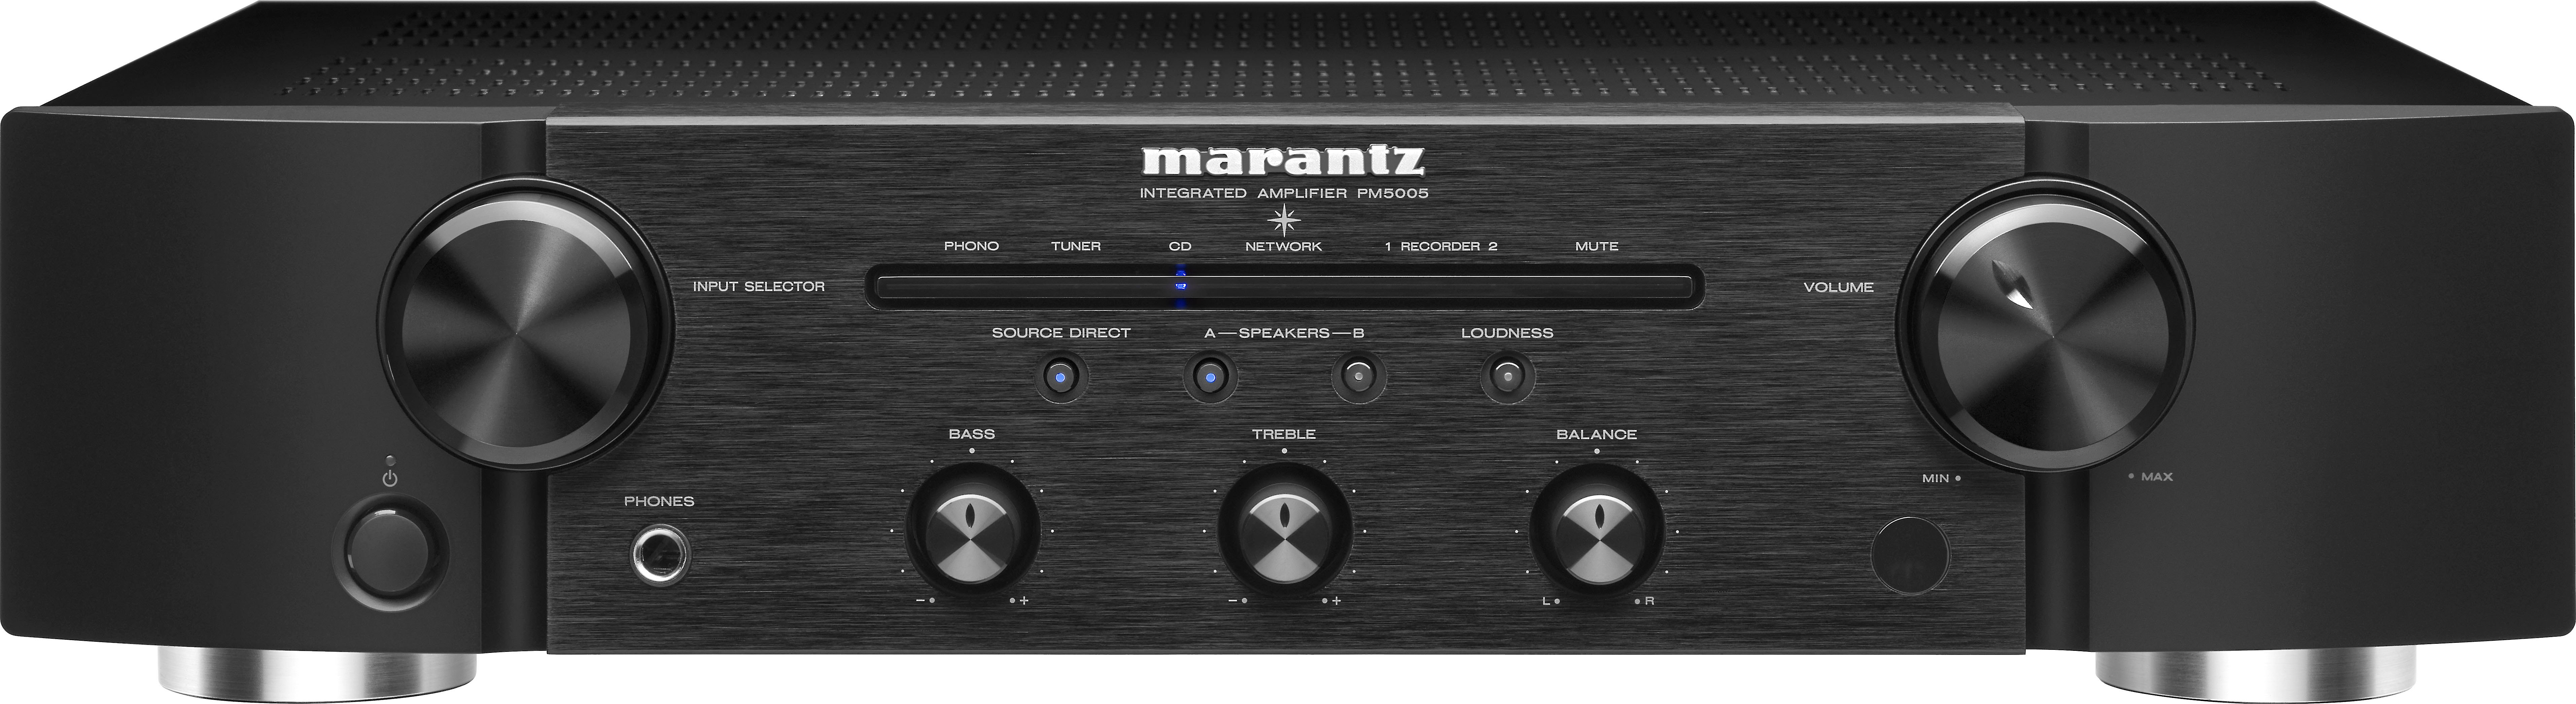 Customer Reviews: Marantz PM5005 Stereo 